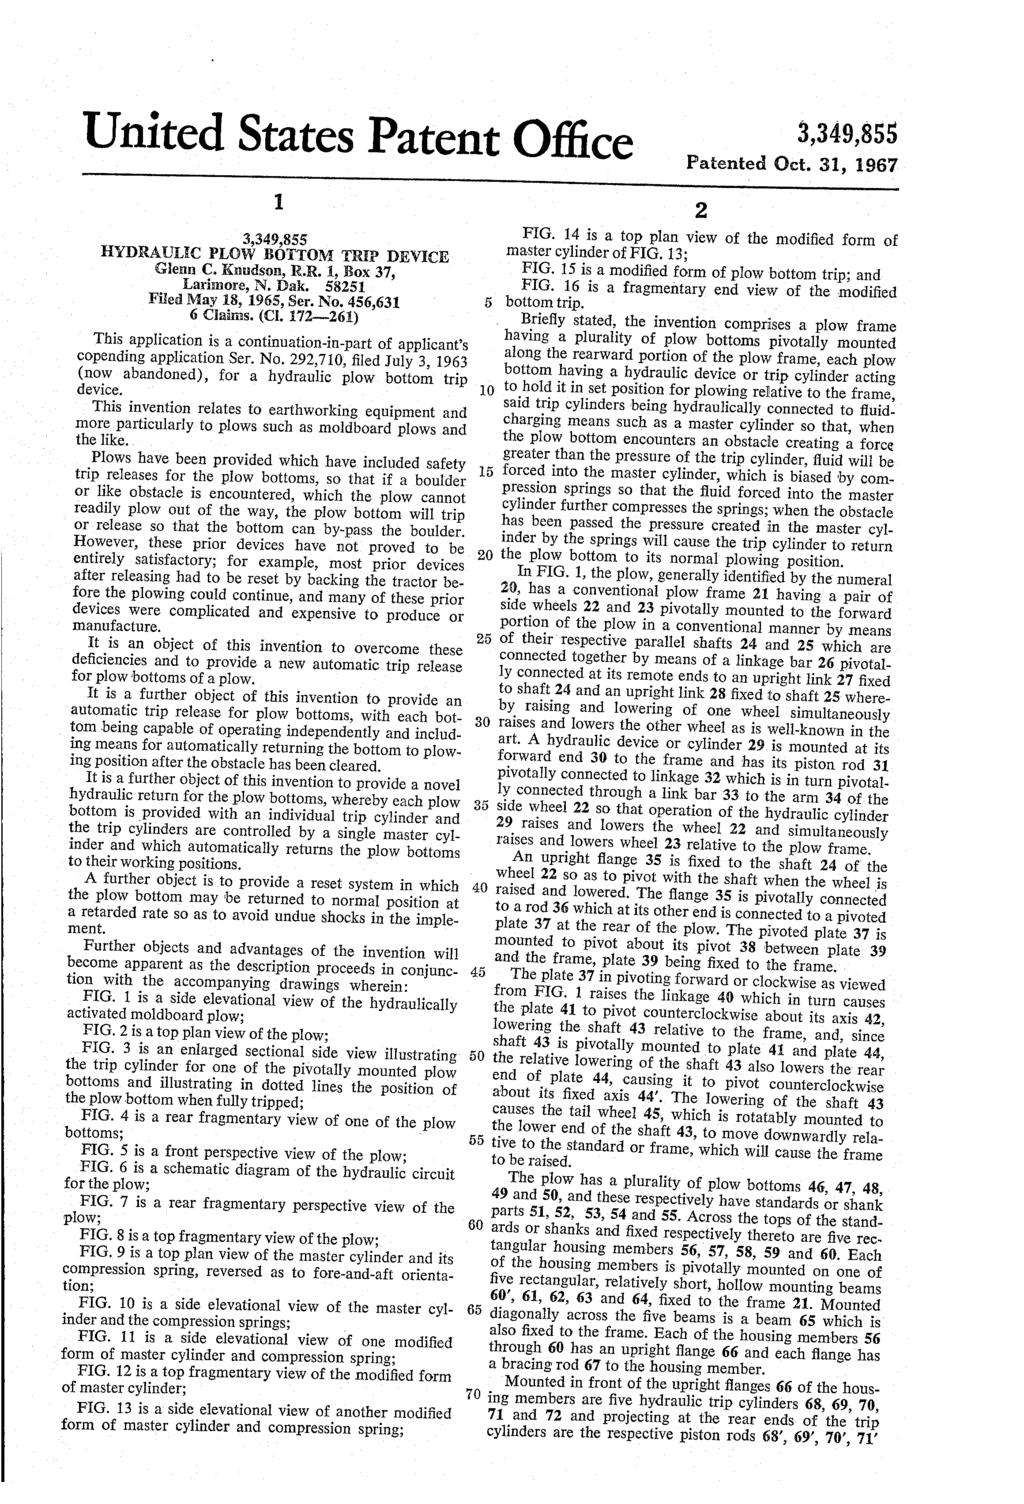 United States Patent Office 3,349,855 Patented Oct. 31, 1967 1. 3,349,855 HYDRAULEC PLOW BOTTOM TREP DEVICE Glenn C. Knudson, R.R. 1, Box 37, Larimore, N. Dak. 58251 Filed May 18, 1965, Ser. No.